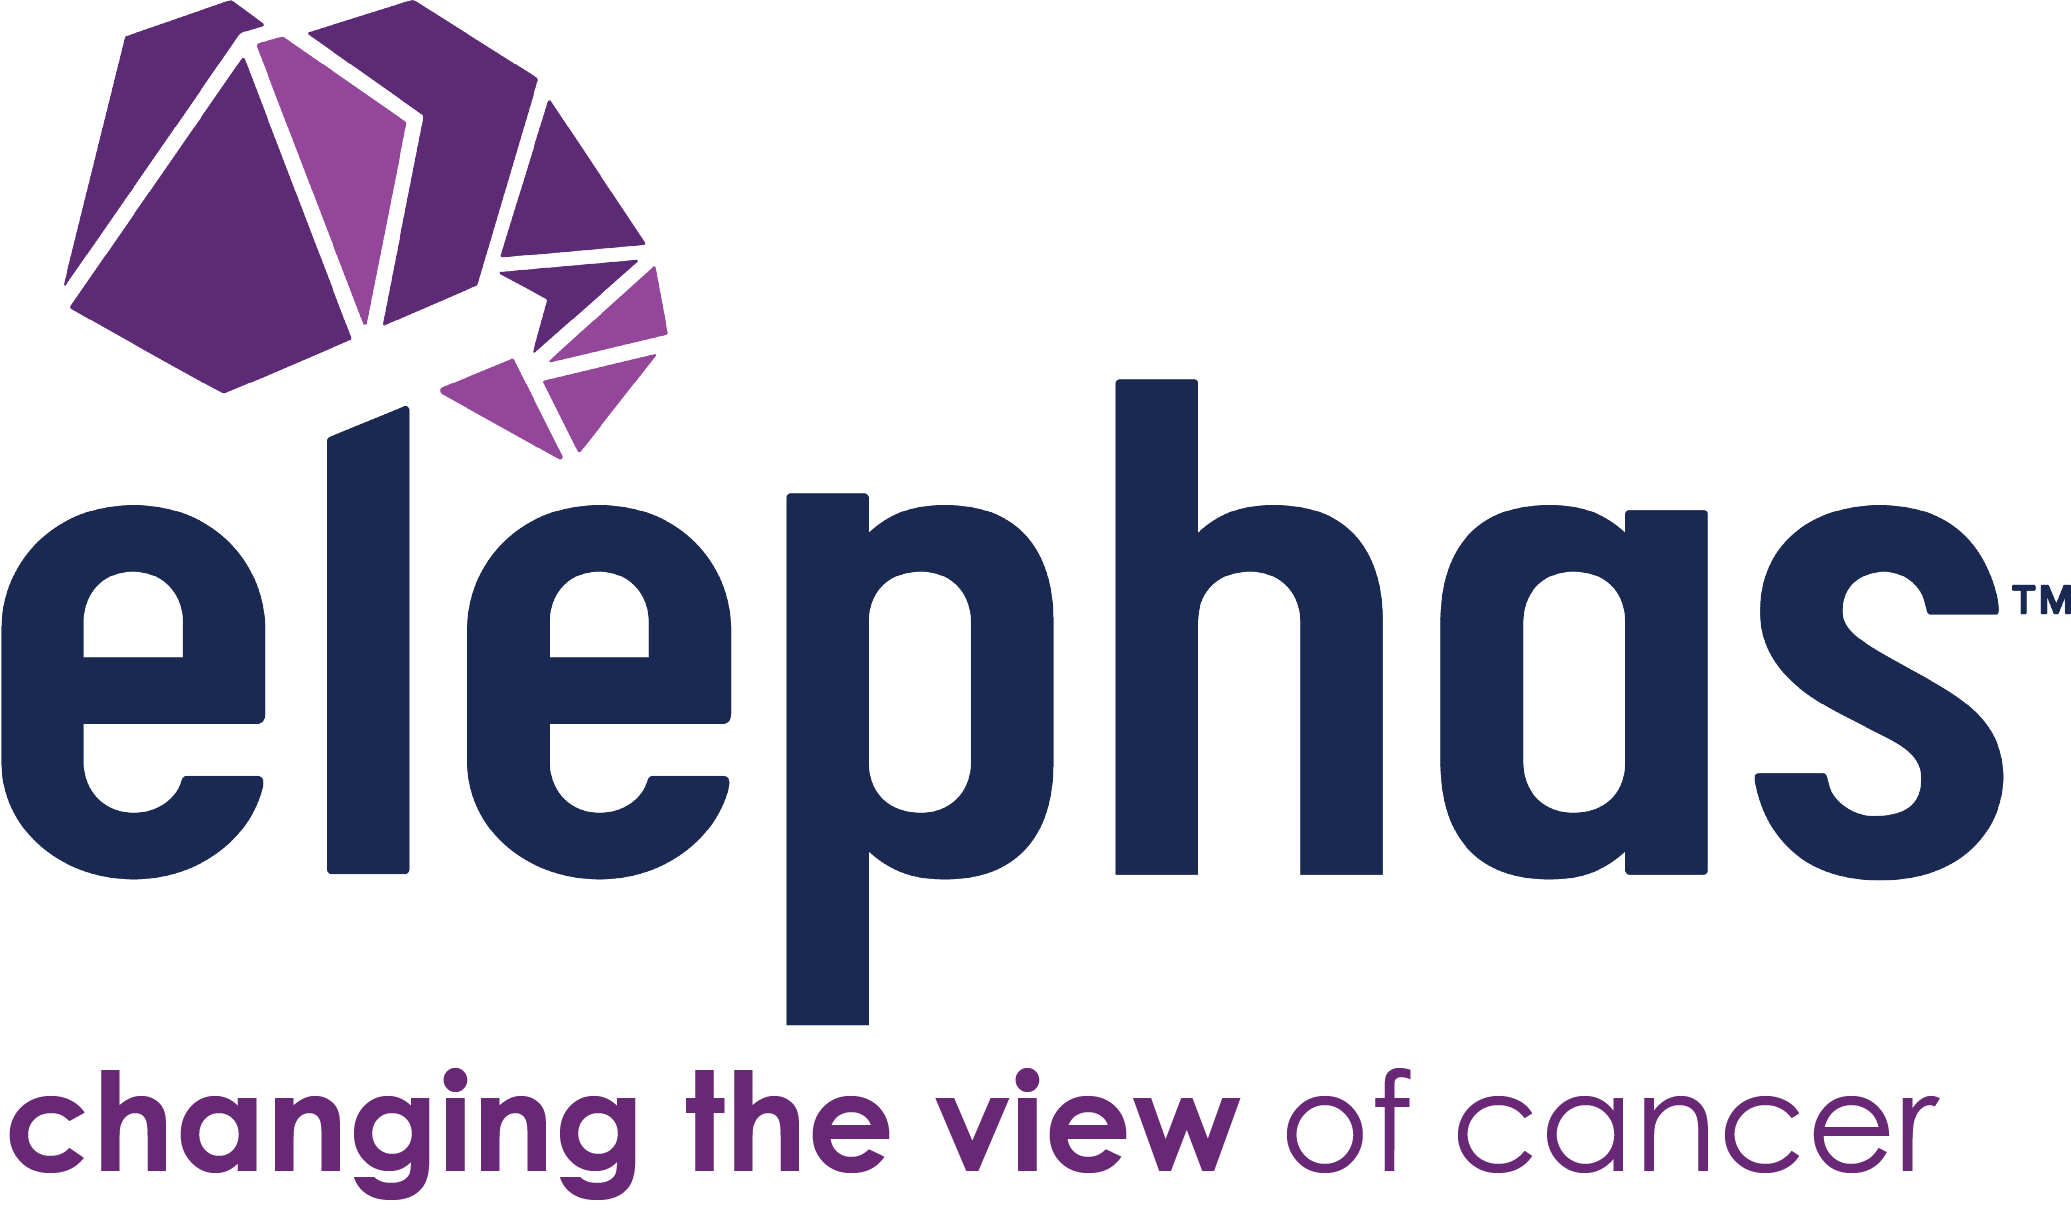 Elephas full logo with tagline